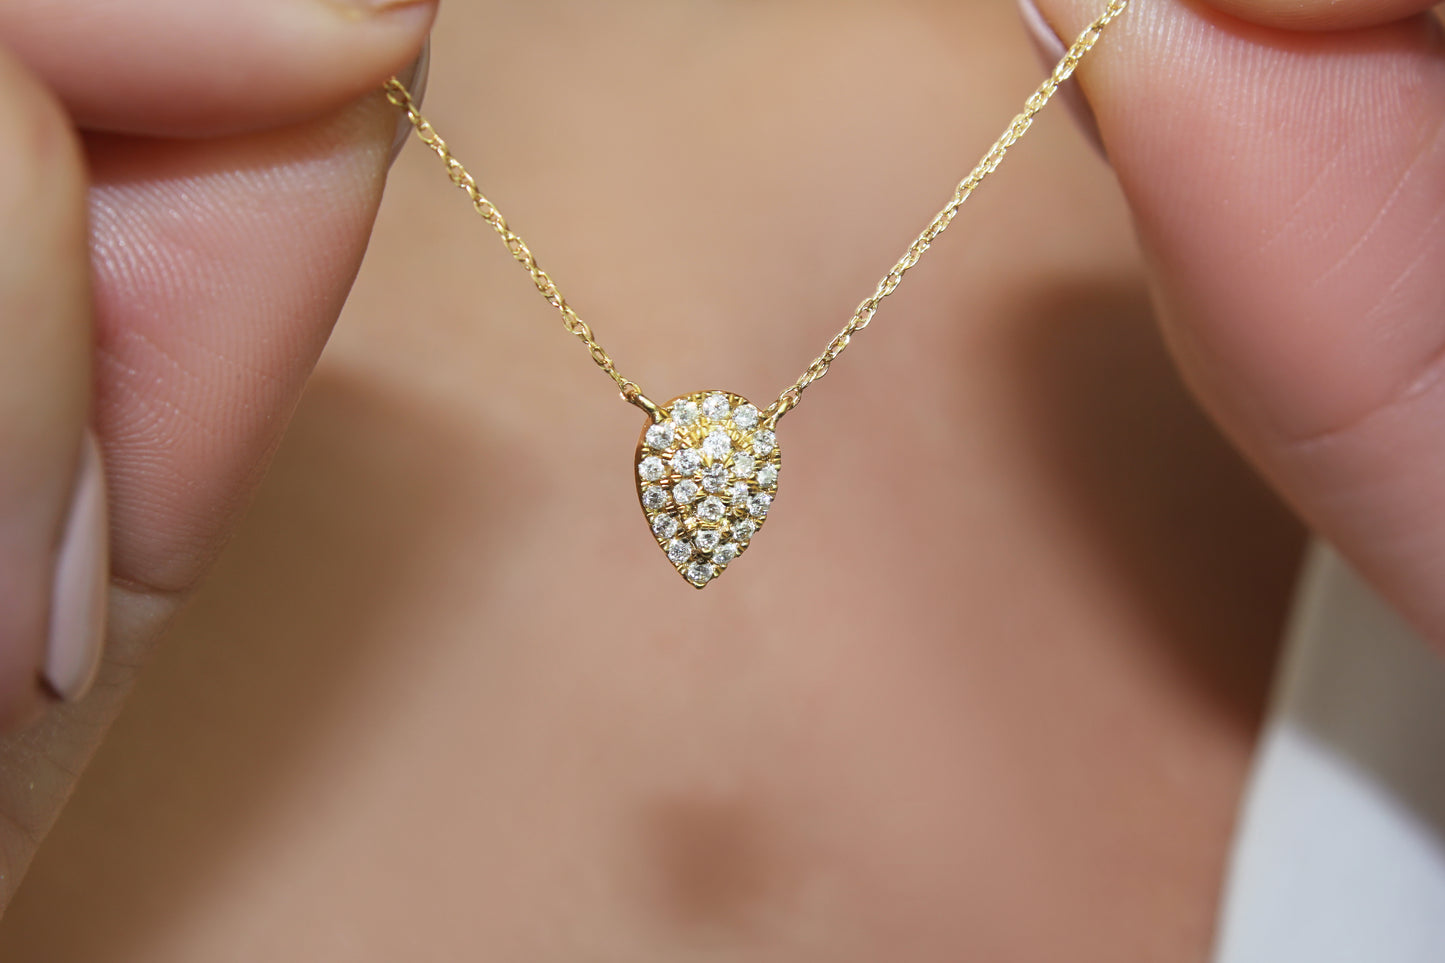 Belantina 1/8 Carat Diamond Teardrop Necklace in 14k White & Yellow Gold